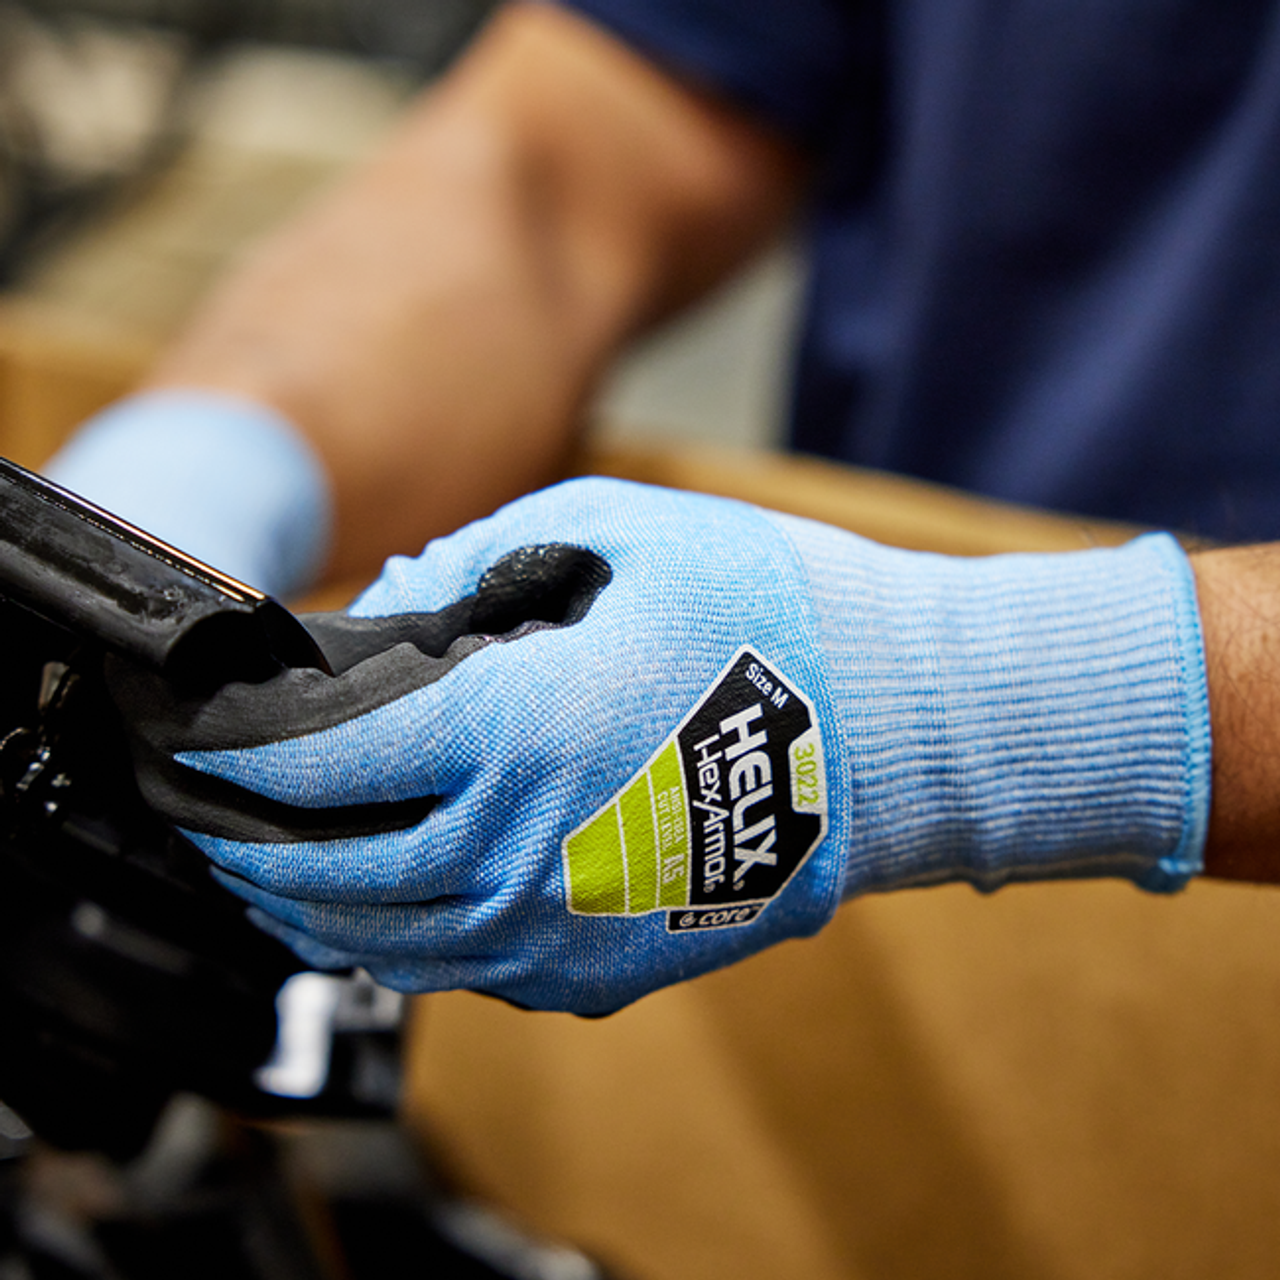 Mechanix Wear COLDWORK HI-VIZ FASTFIT CWKSFF-X91 High-Visibility Cut  Resistant Work Gloves - Pair